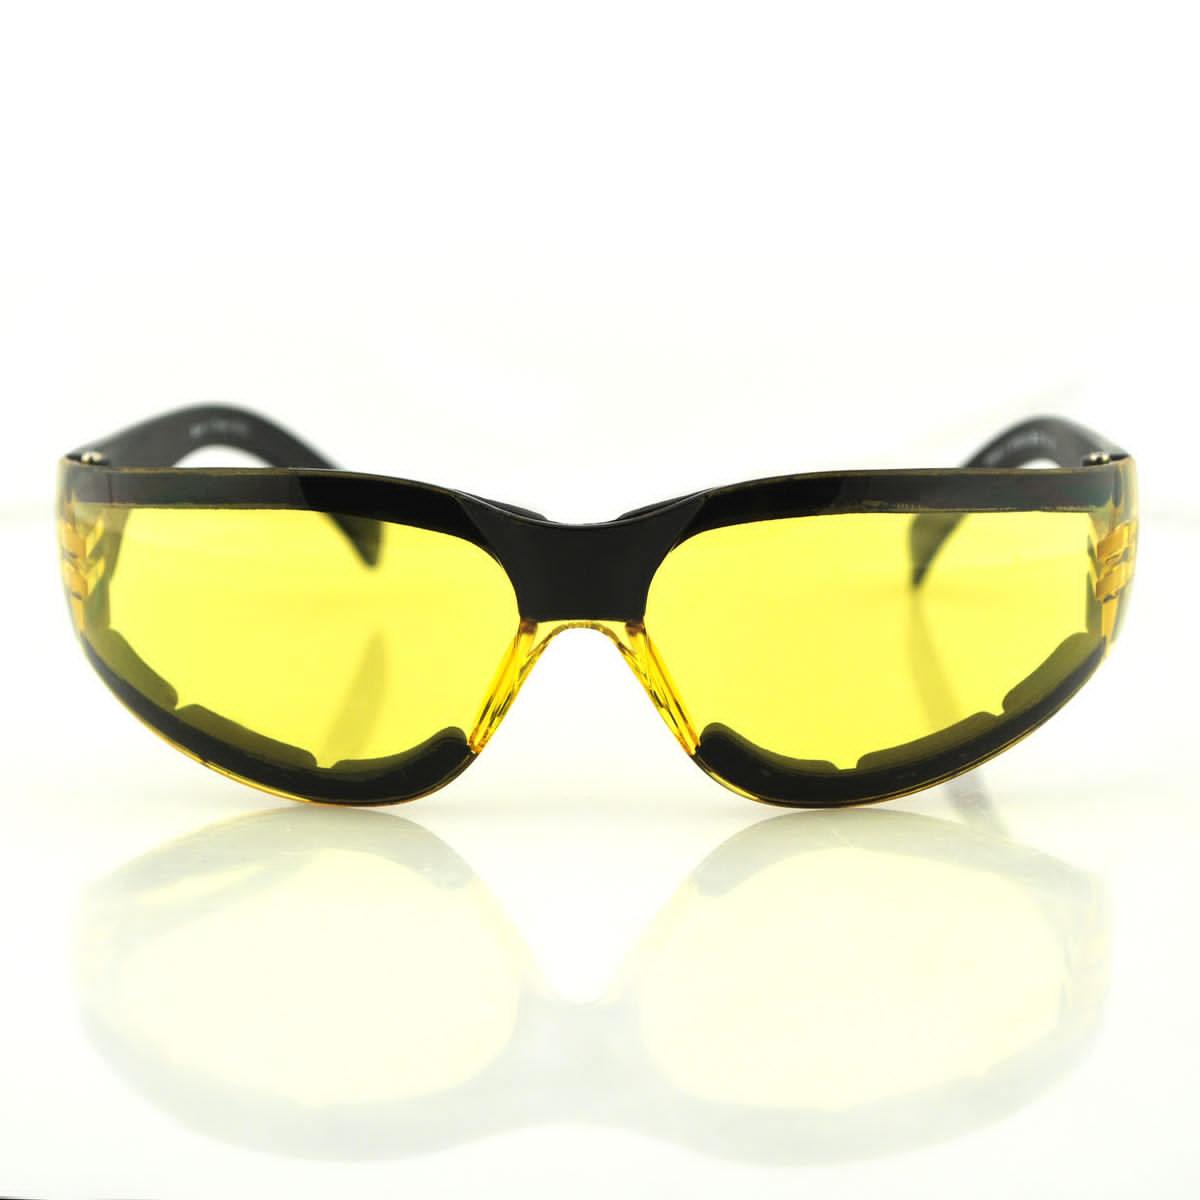 Bobster Shield III Sunglasses - American Legend Rider